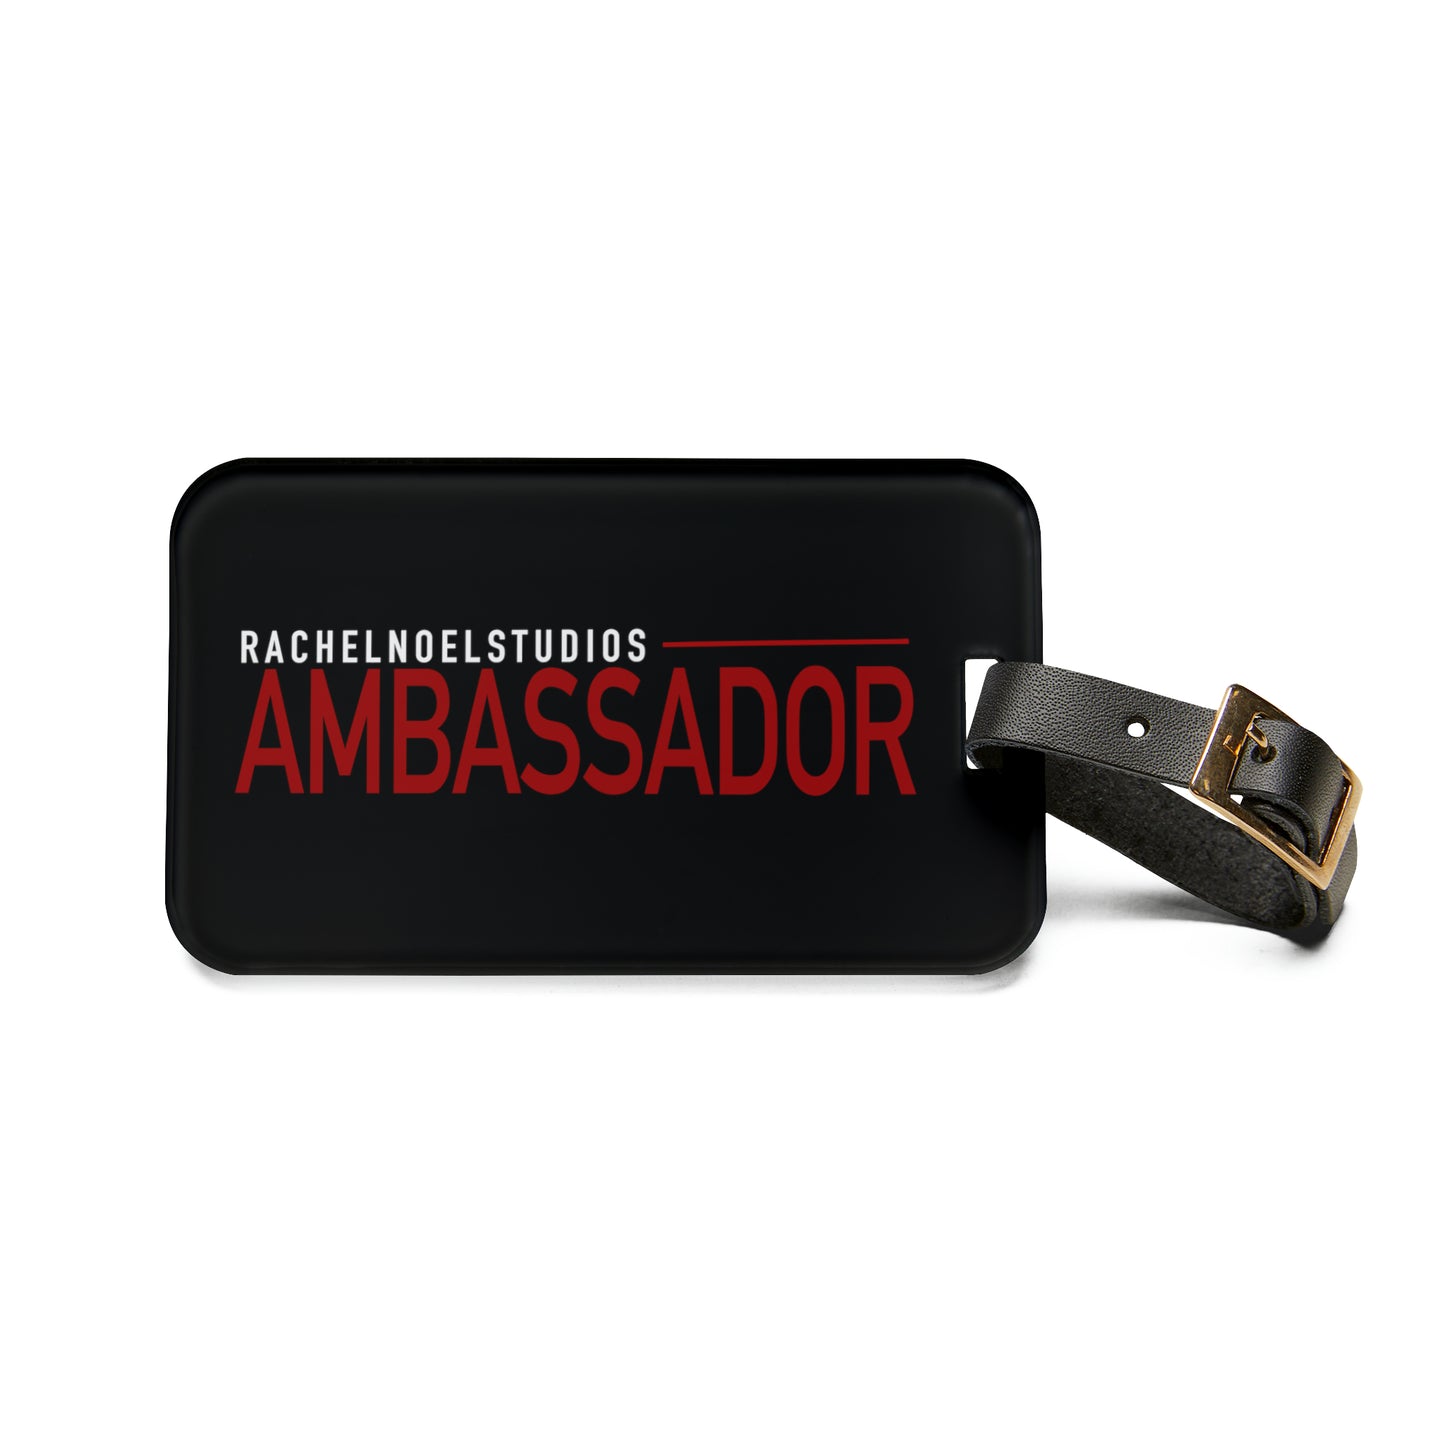 “Ambassador” Luggage Tag